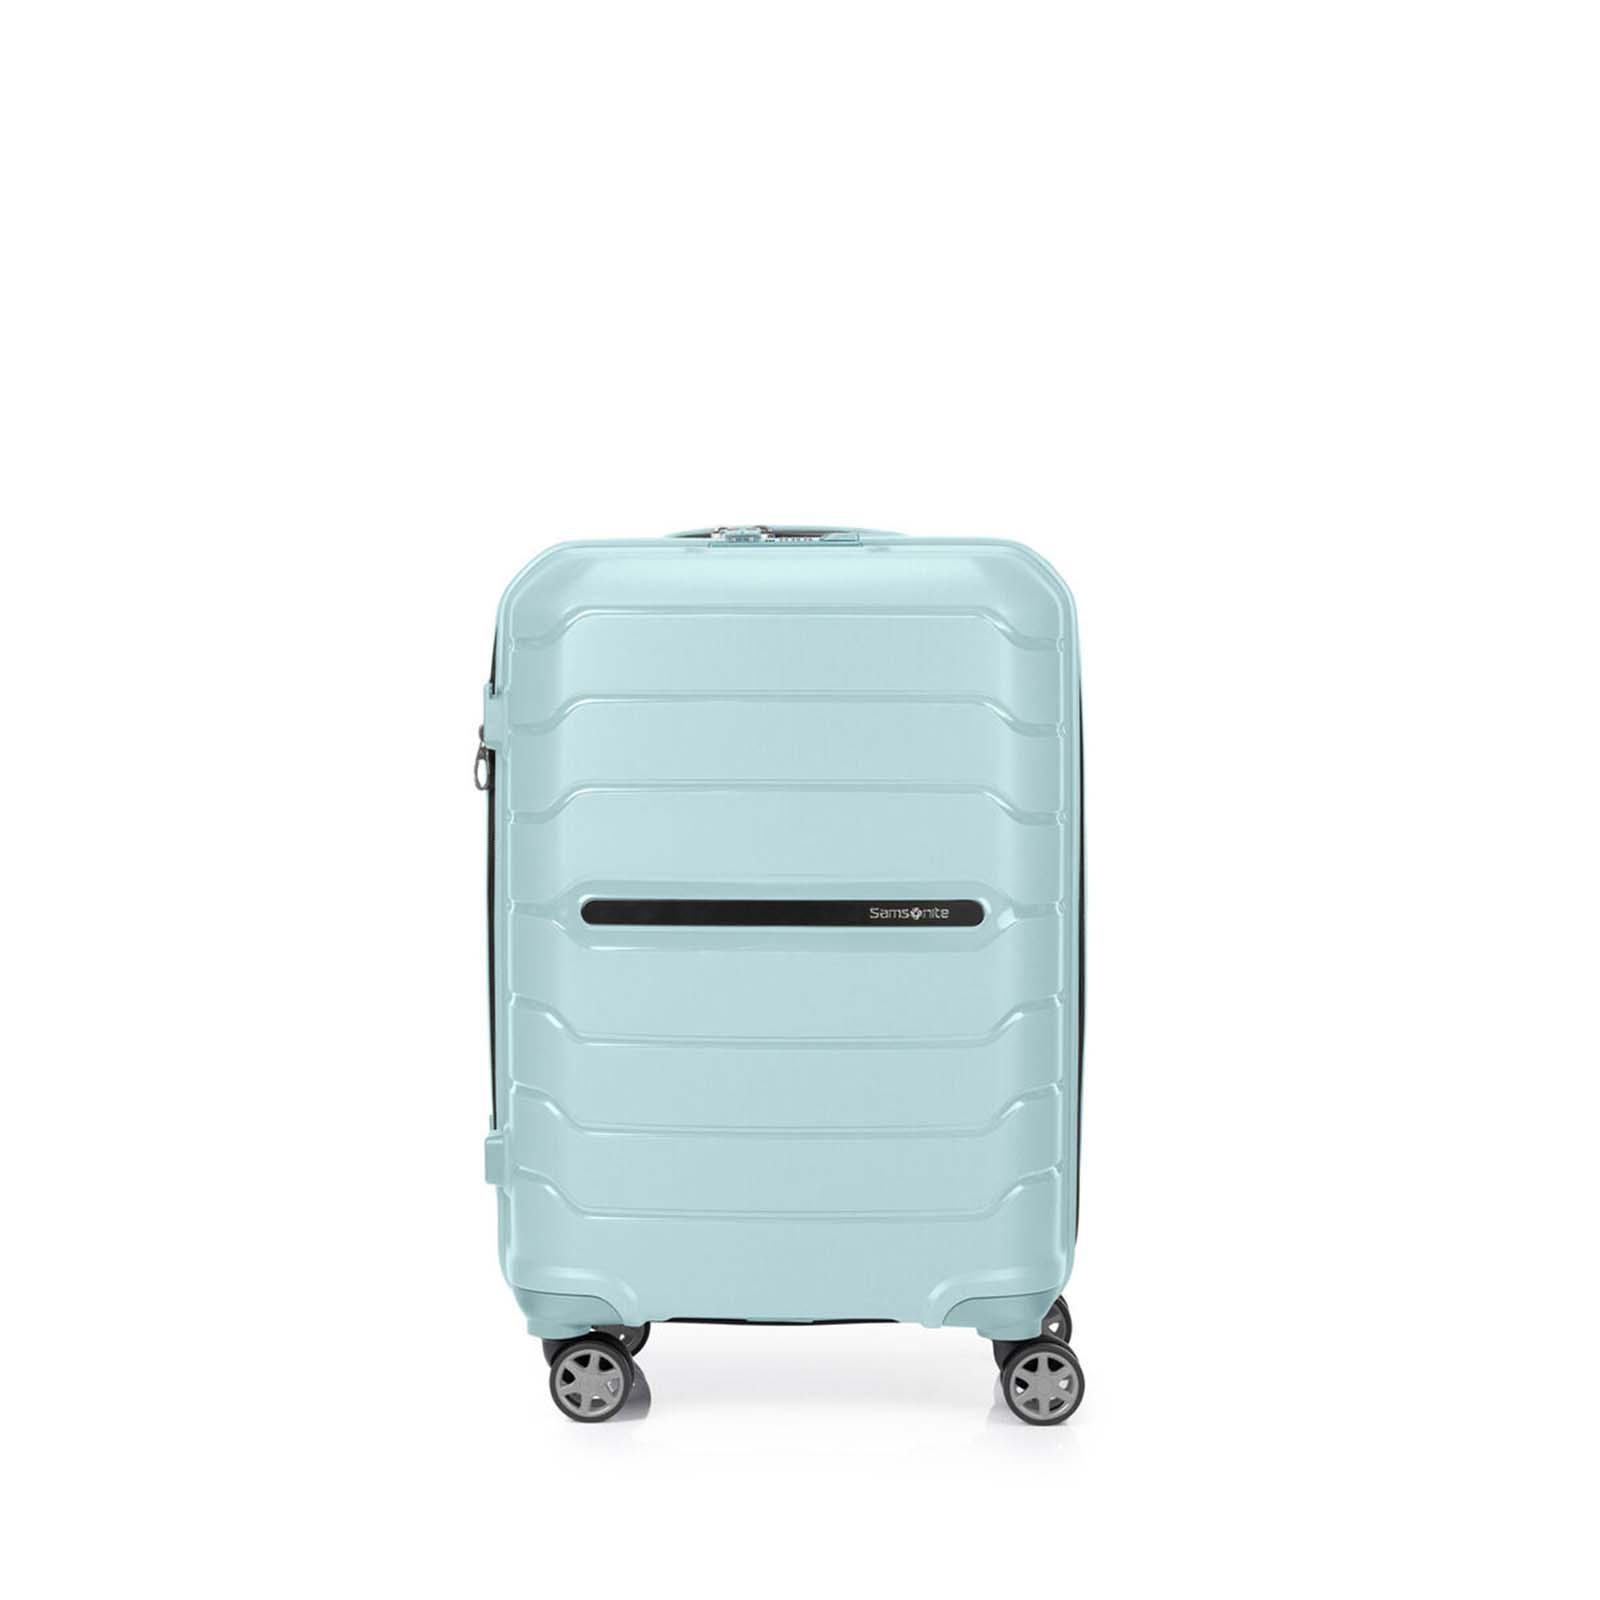 Samsonite-Oc2lite-55cm-Carry-On-Suitcase-Lagoon-Blue-Front